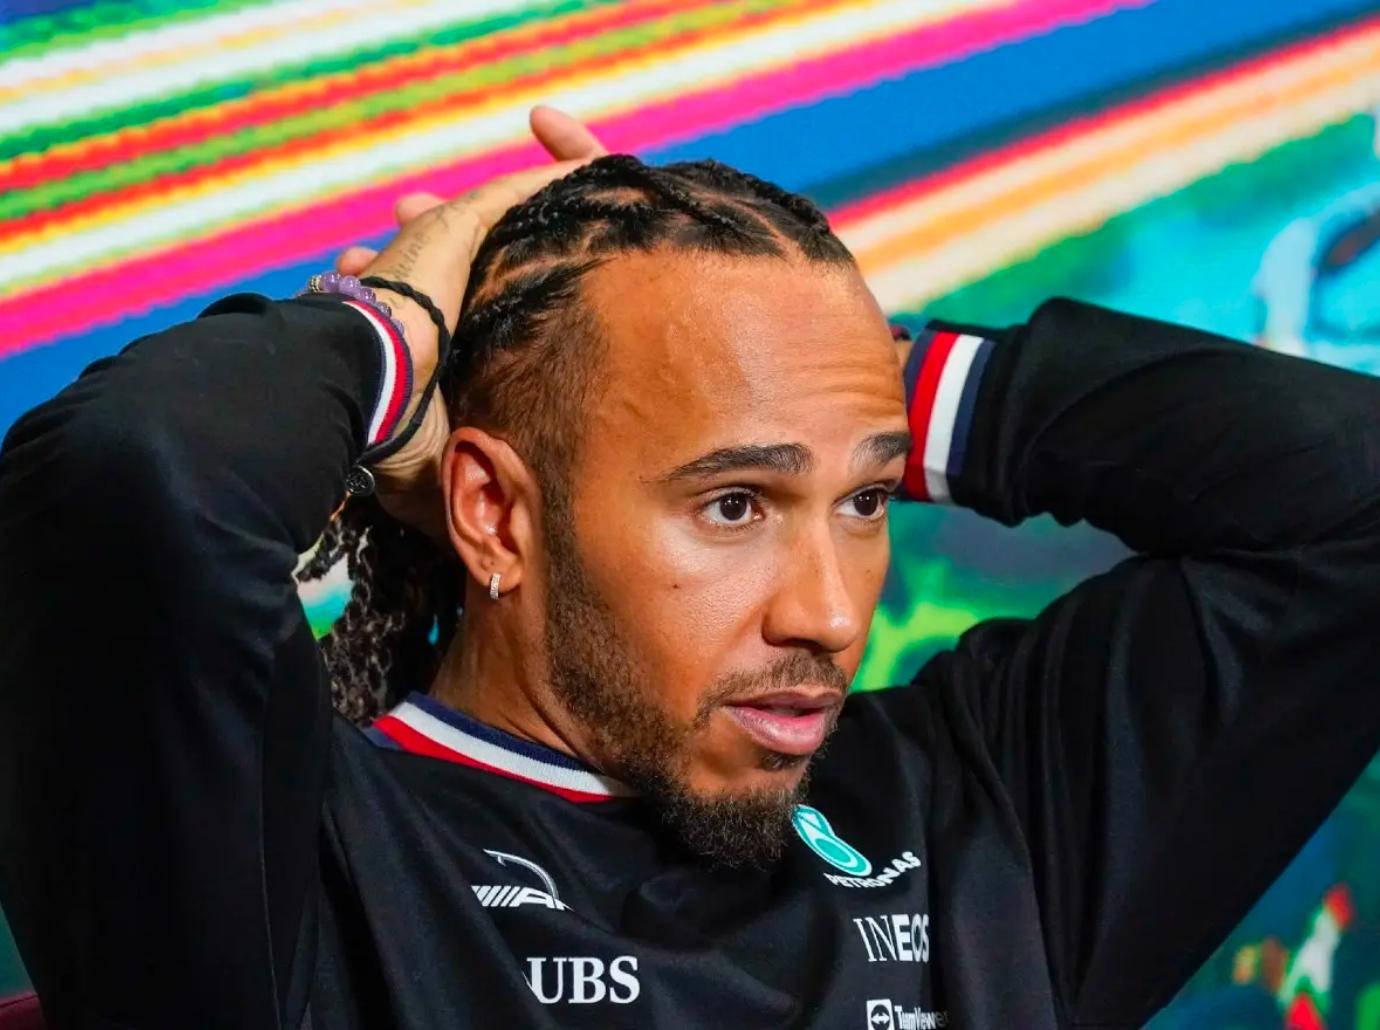 Lewis Hamilton Not Focused On Racing As Shakira Romance Rumors Swirl